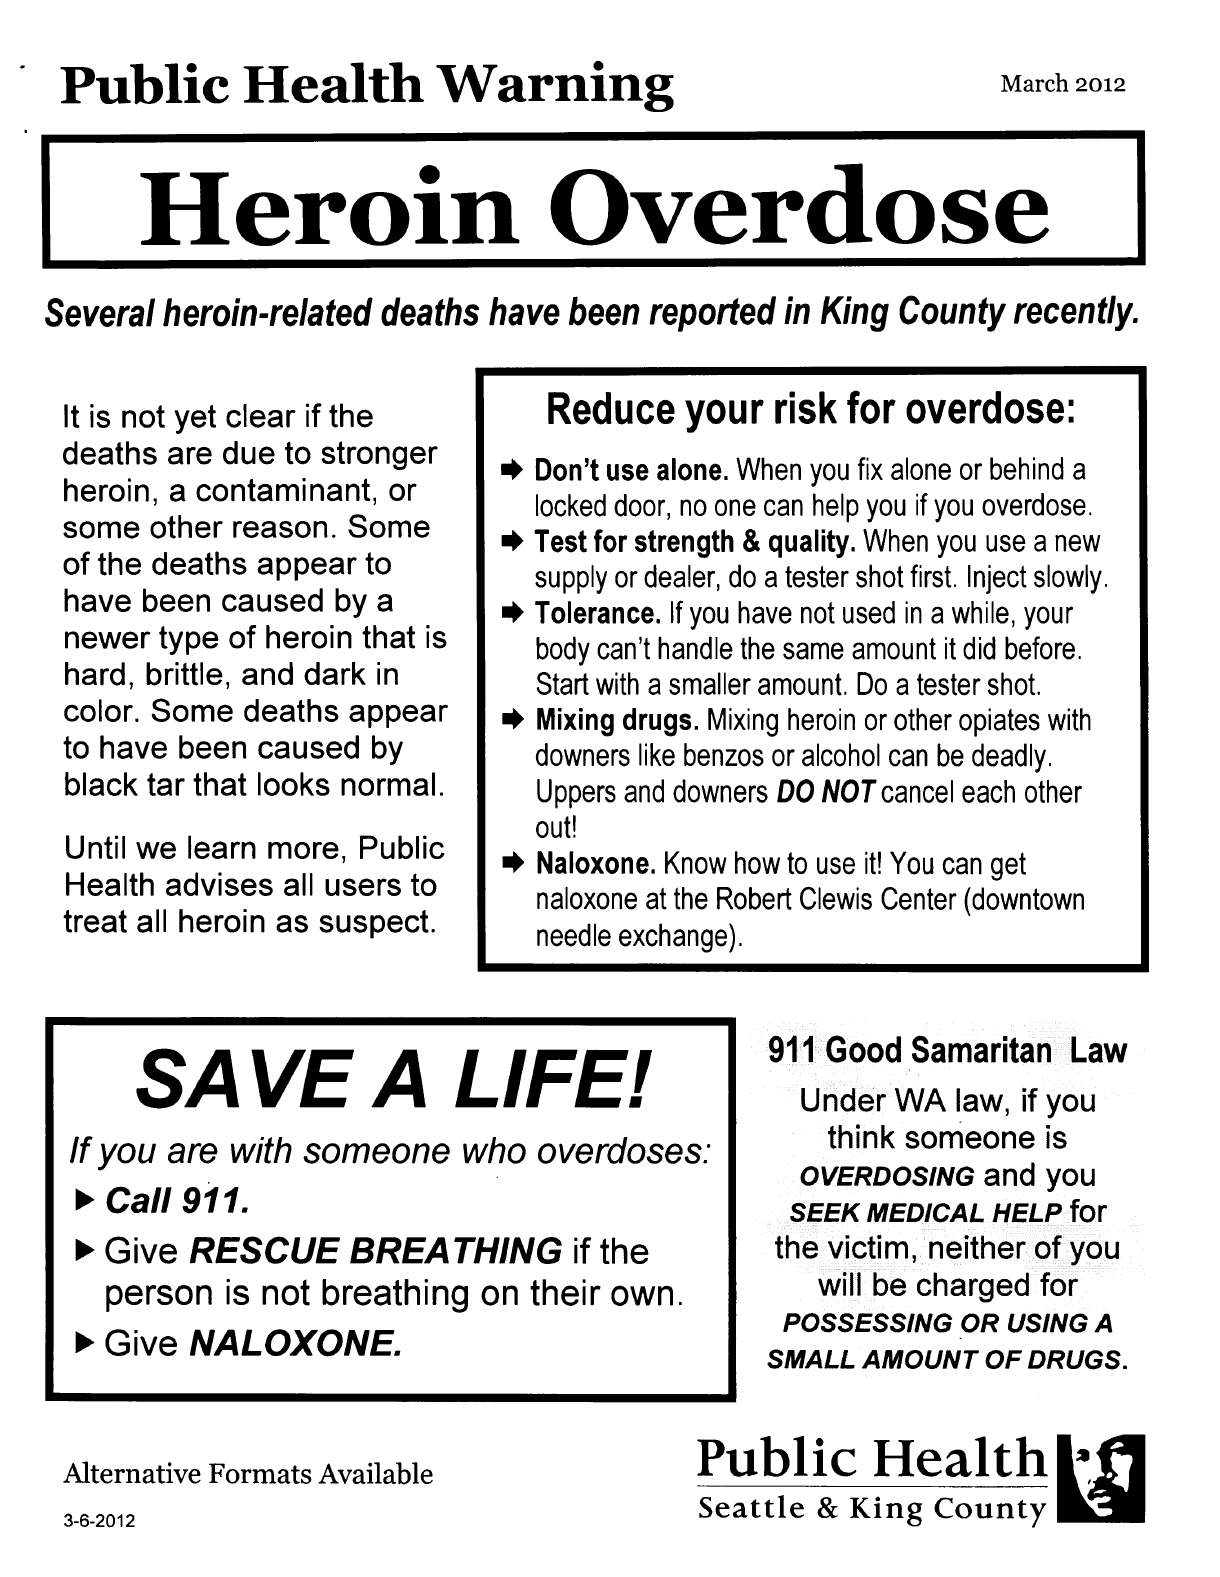 Public Health Warning - Heroin Overdose